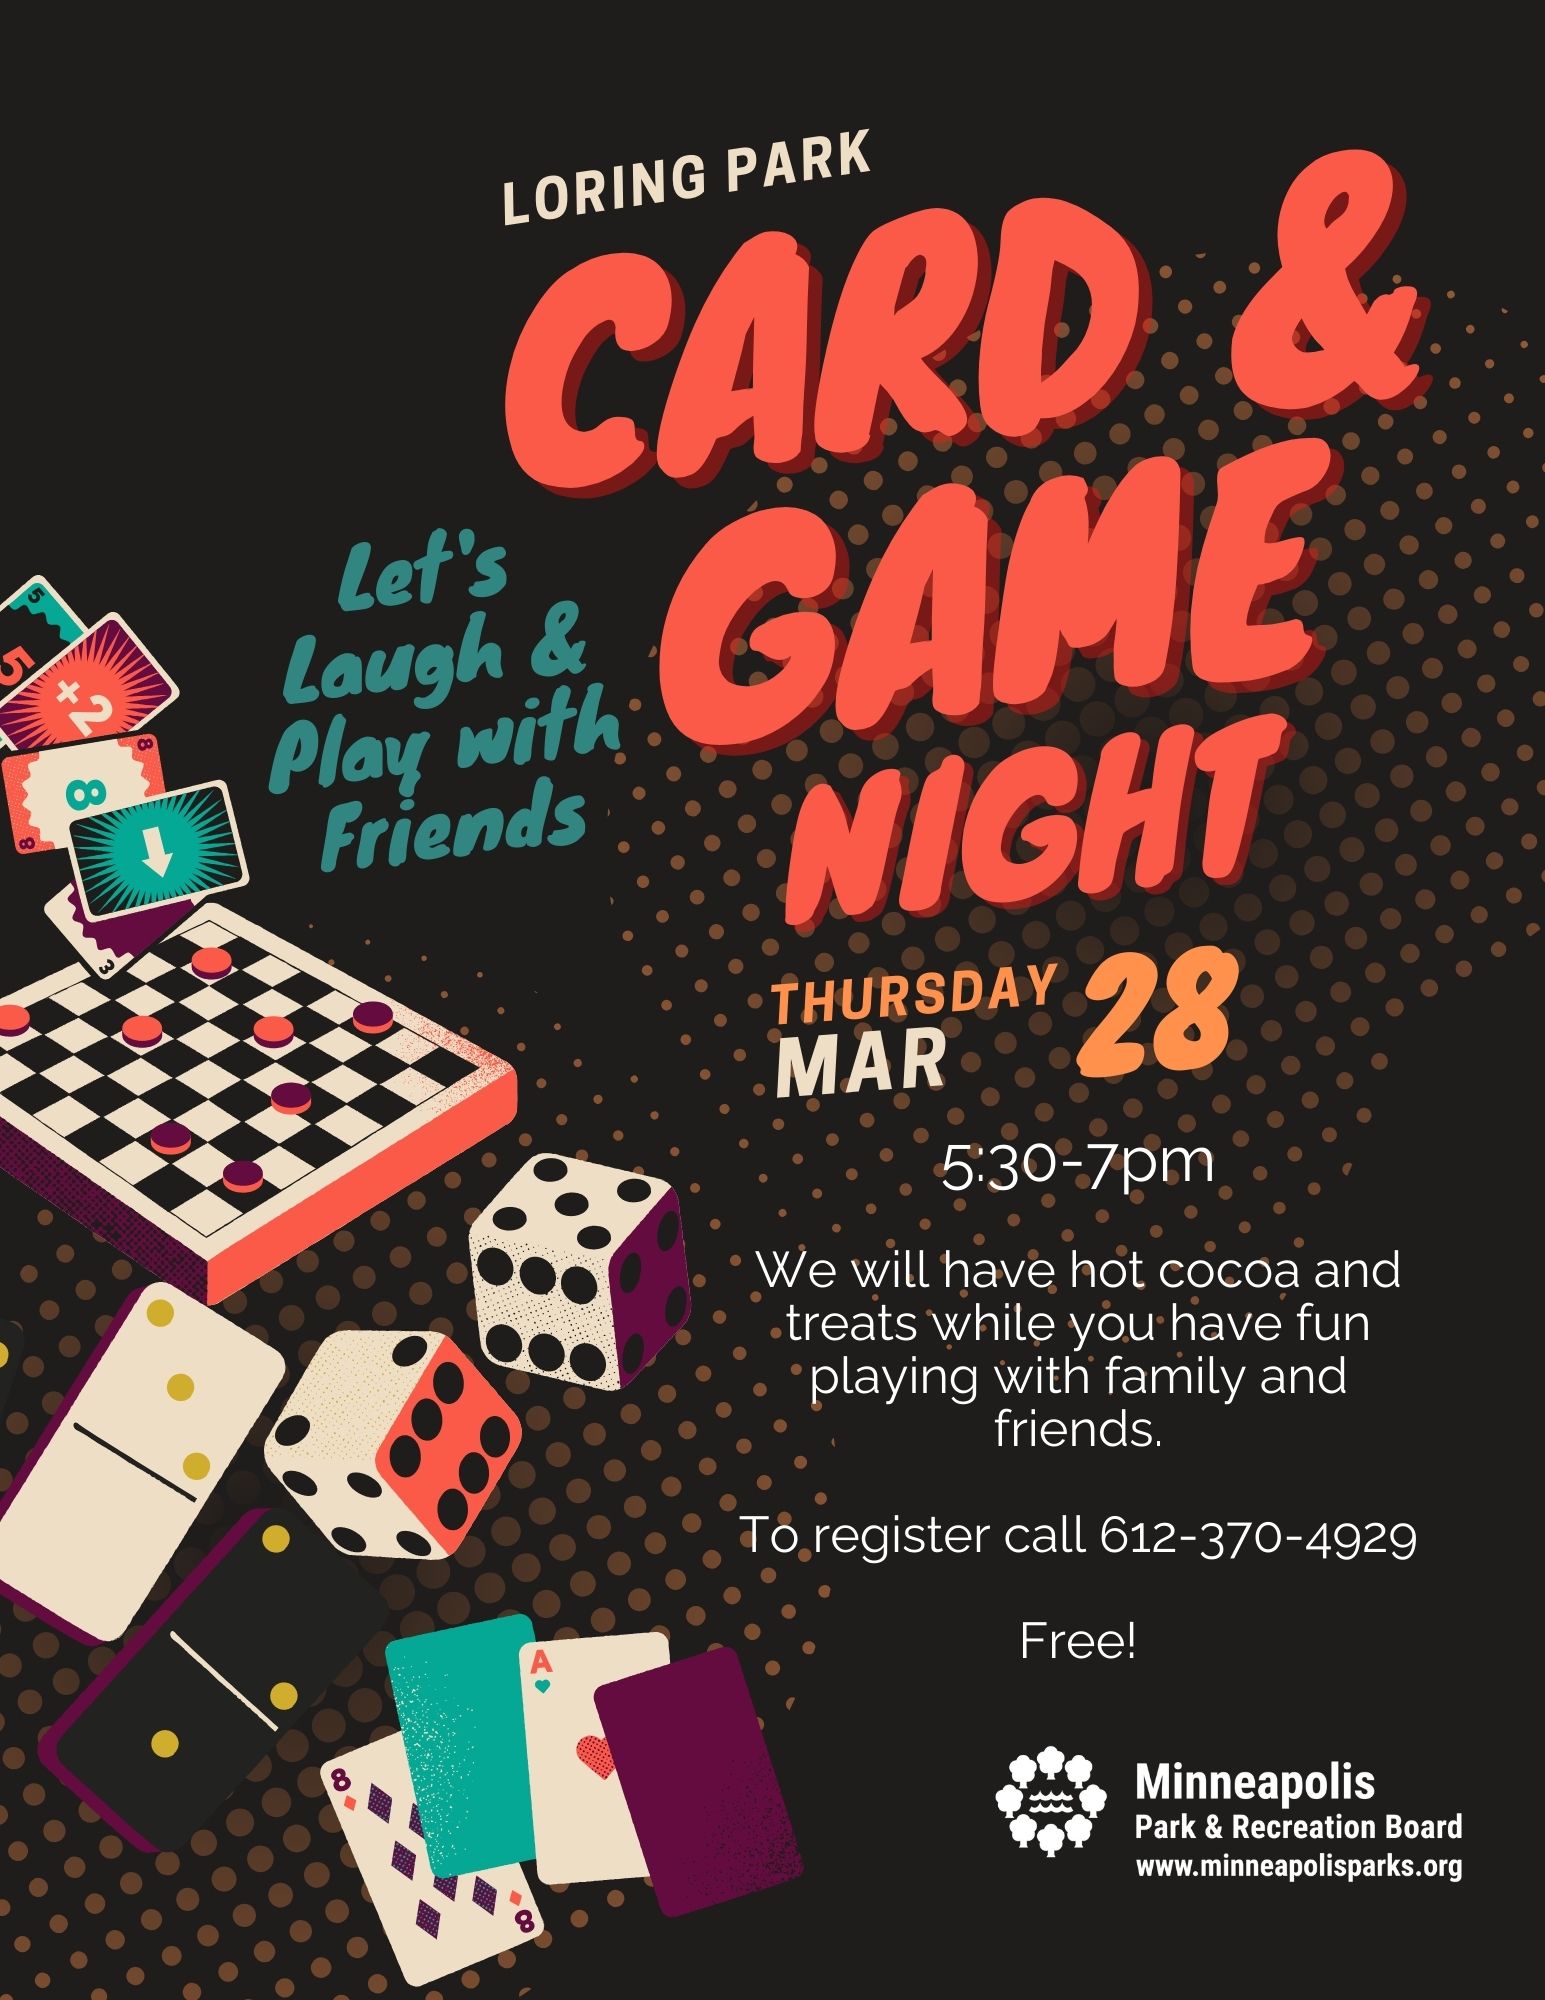 Card & Game Night at Loring Park